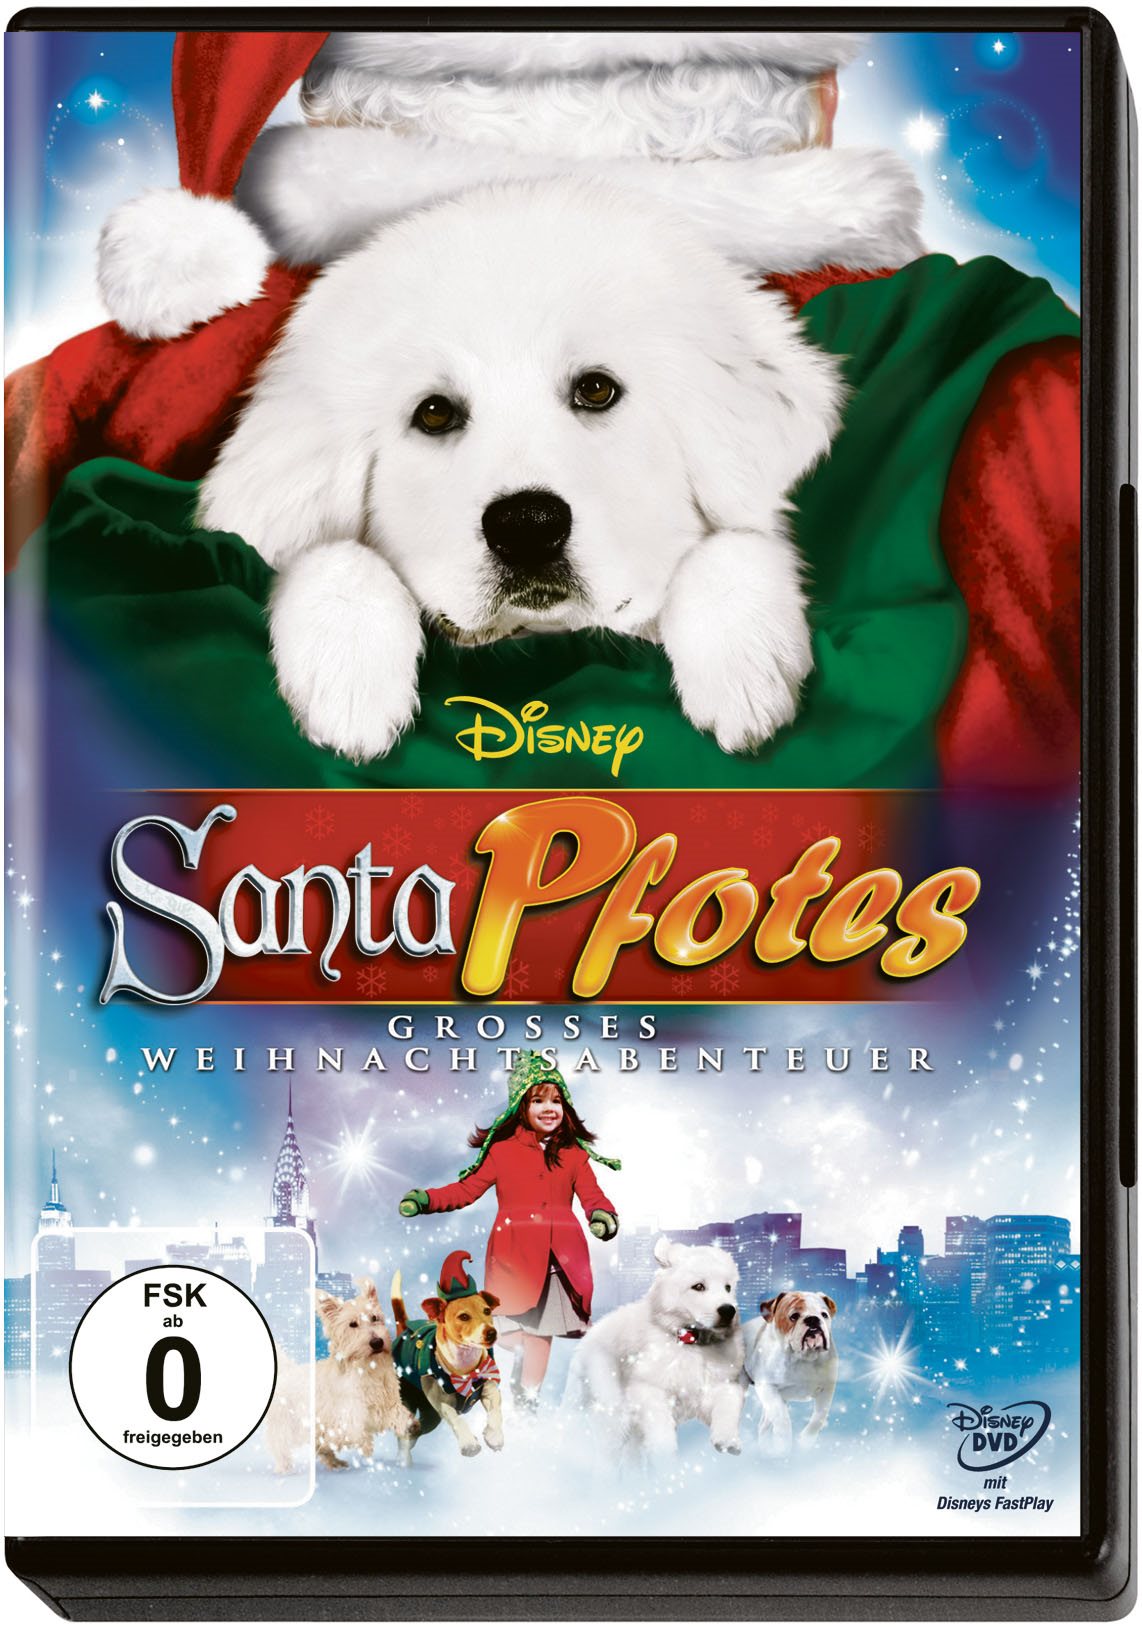 LIBRO_Santa Pfotes großes Weihnachtsabenteuer _DVD